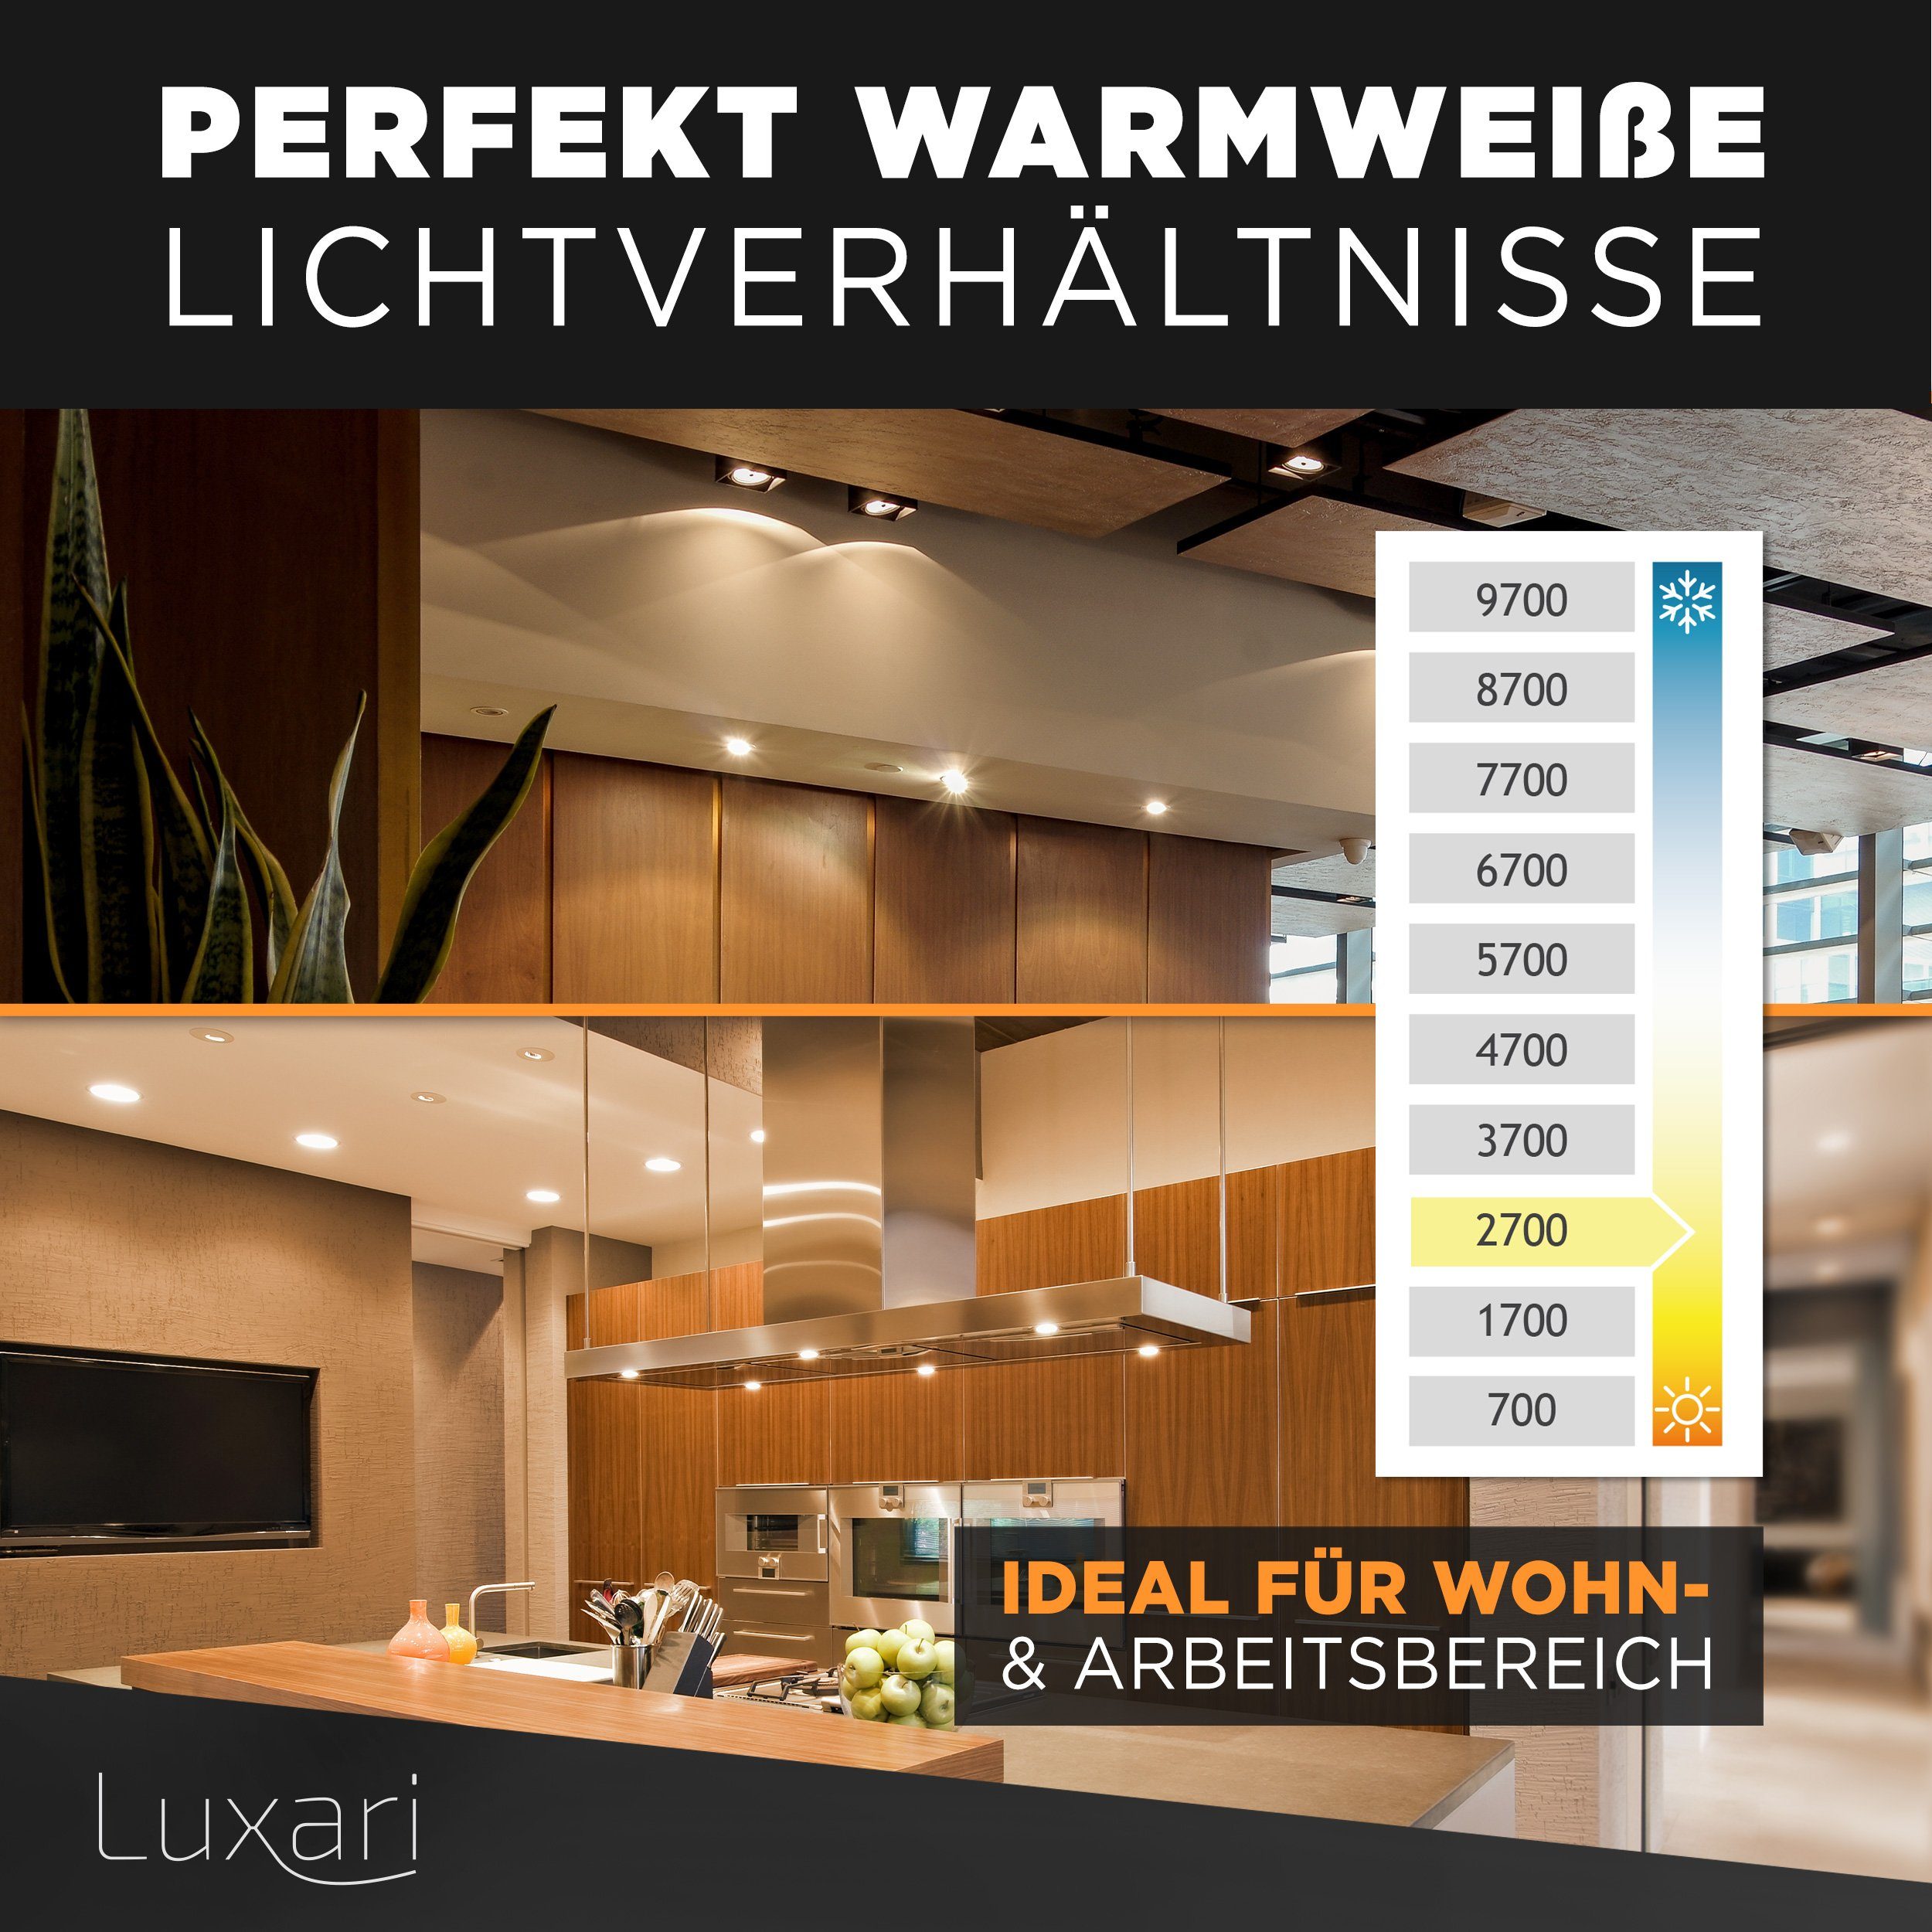 Luxari LED Deckenleuchte Luxari − fest integriert LED, GU5.3 LED LED [5x] Lampe MR16